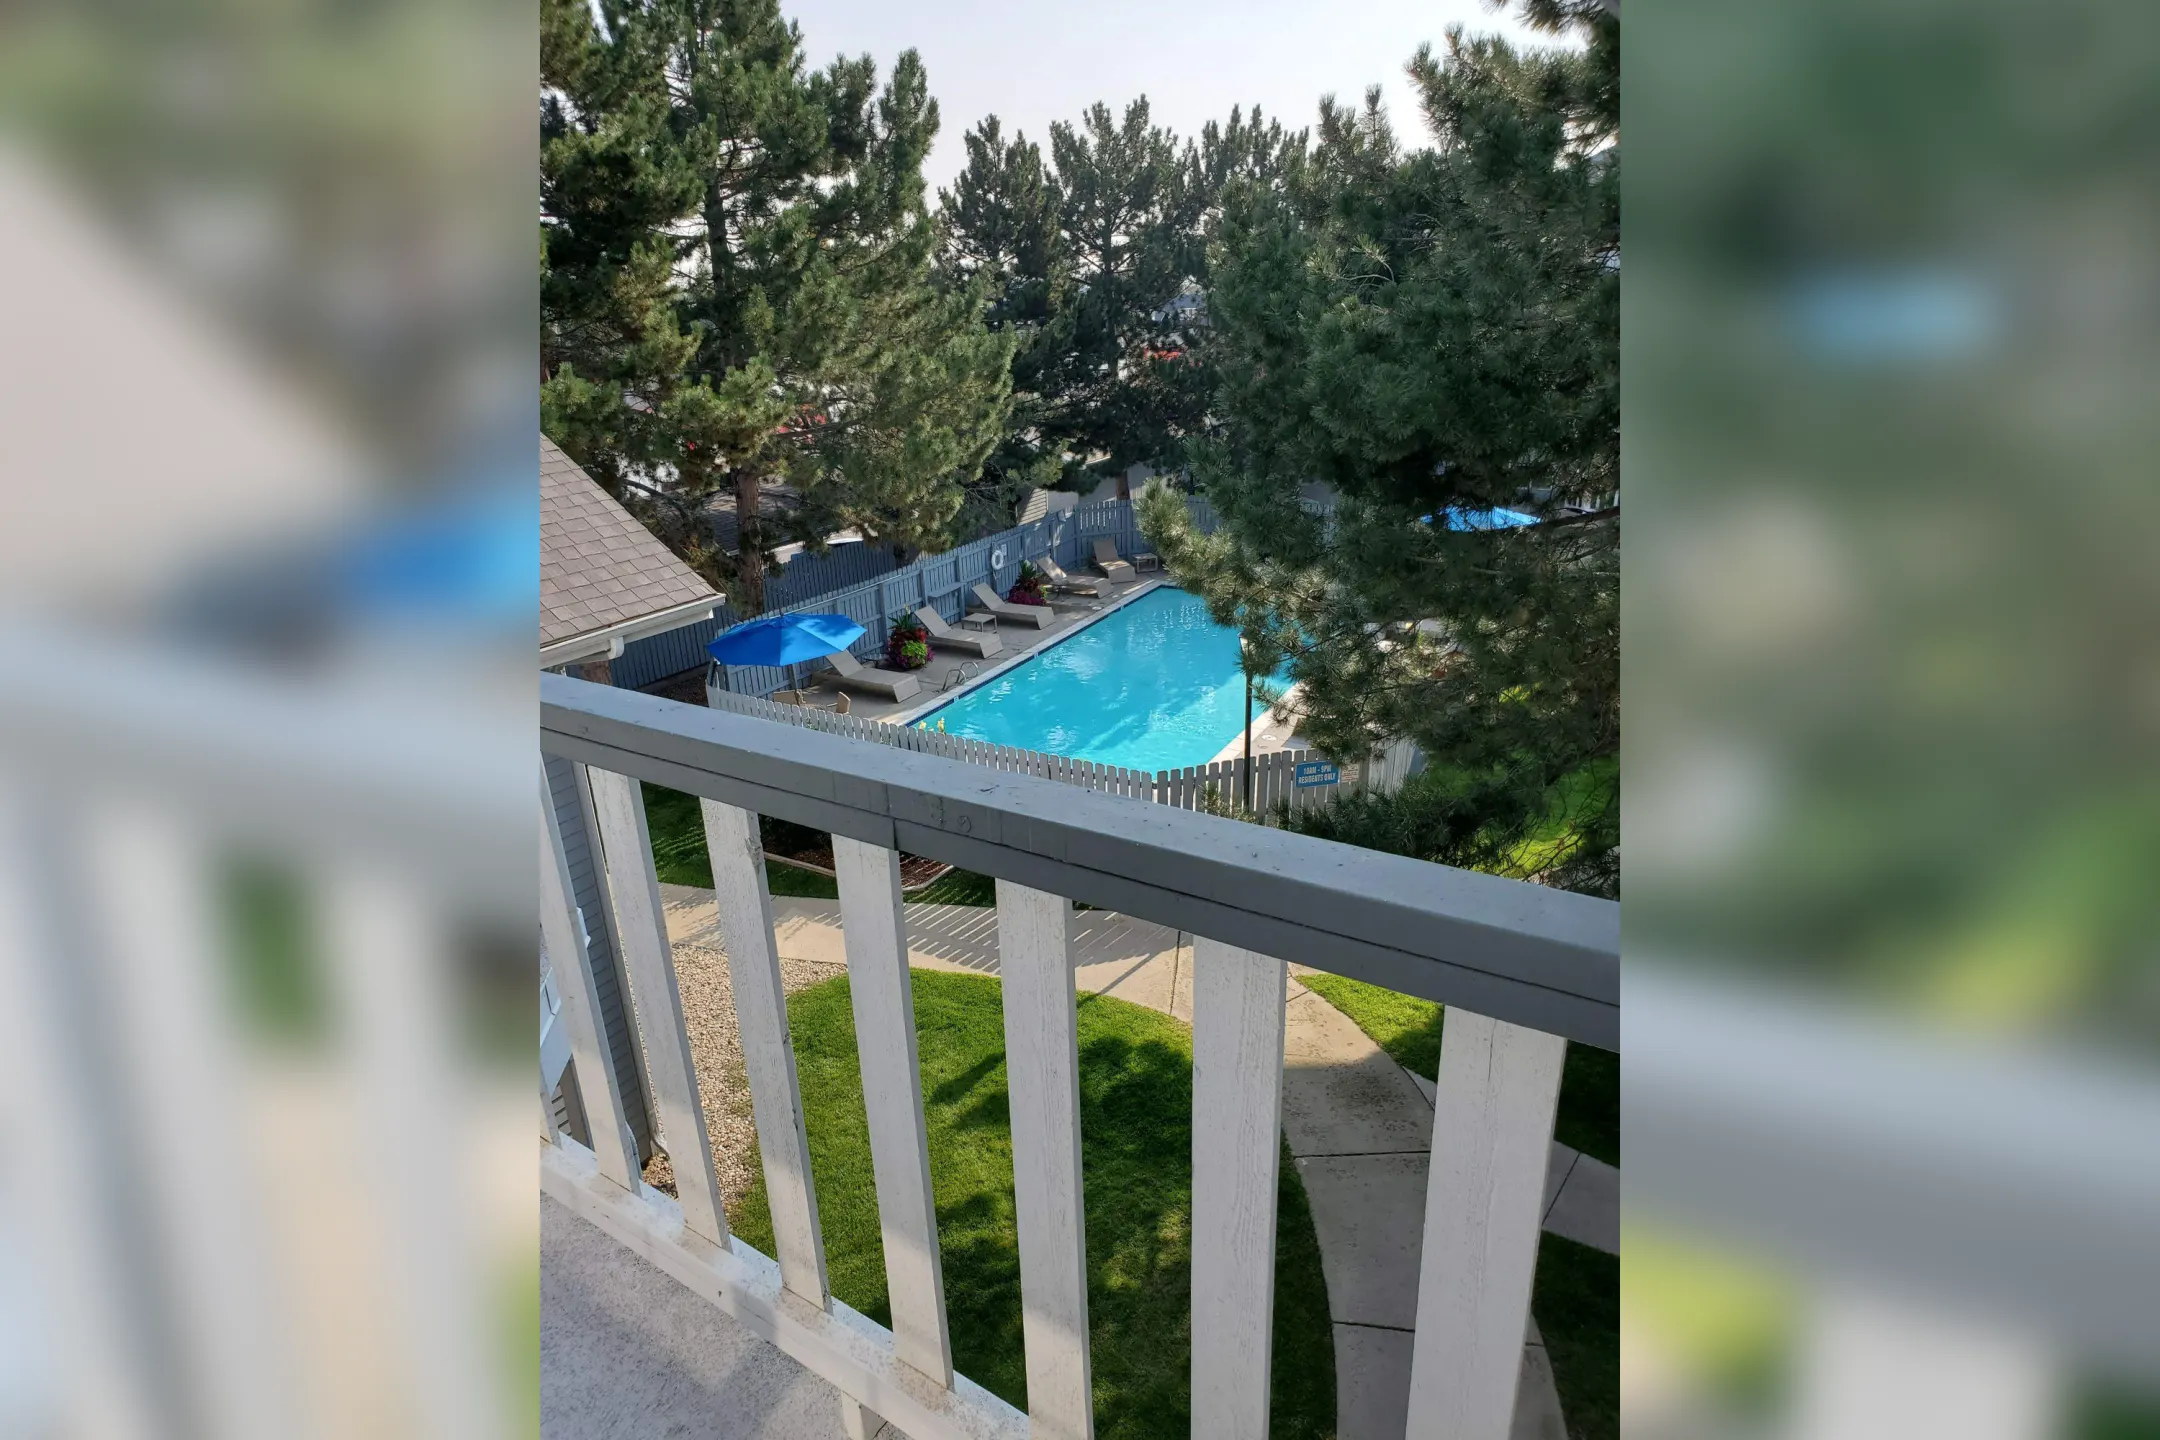 Pool - Victoria Inn Apartments - Longmont, CO